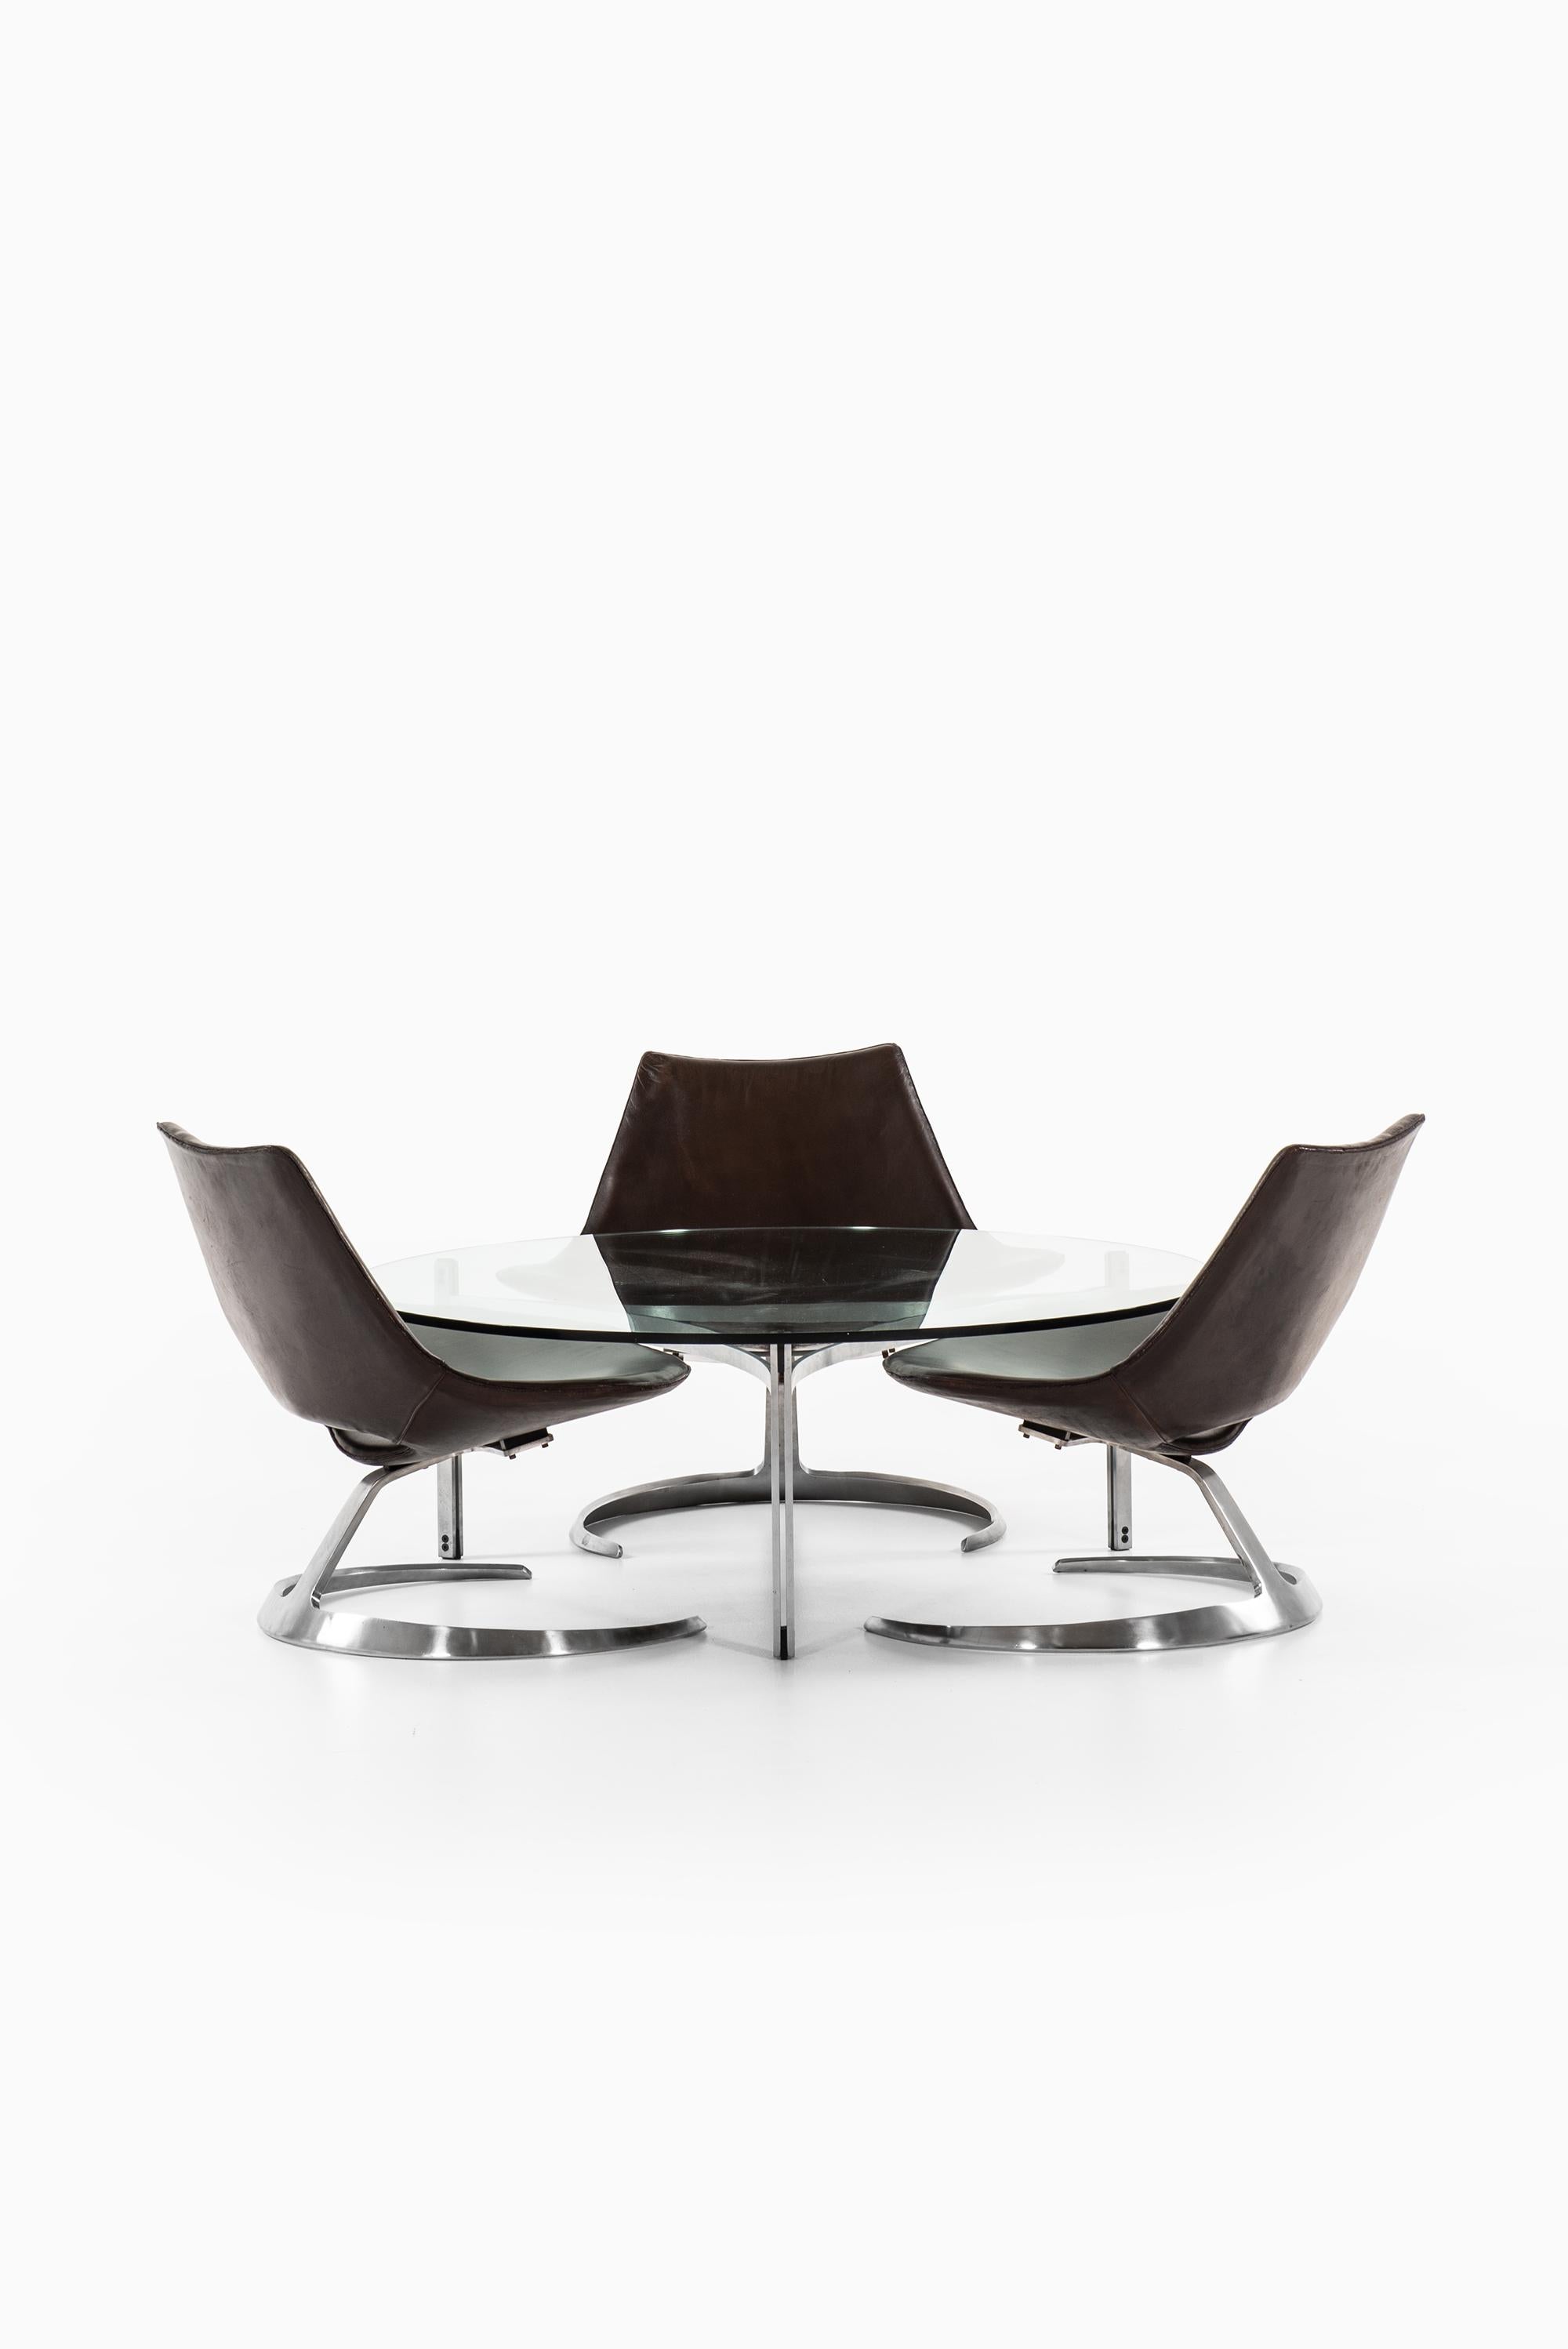 Mid-20th Century Preben Fabricius & Jørgen Kastholm Seating Group by Ivan Schlecter in Denmark For Sale